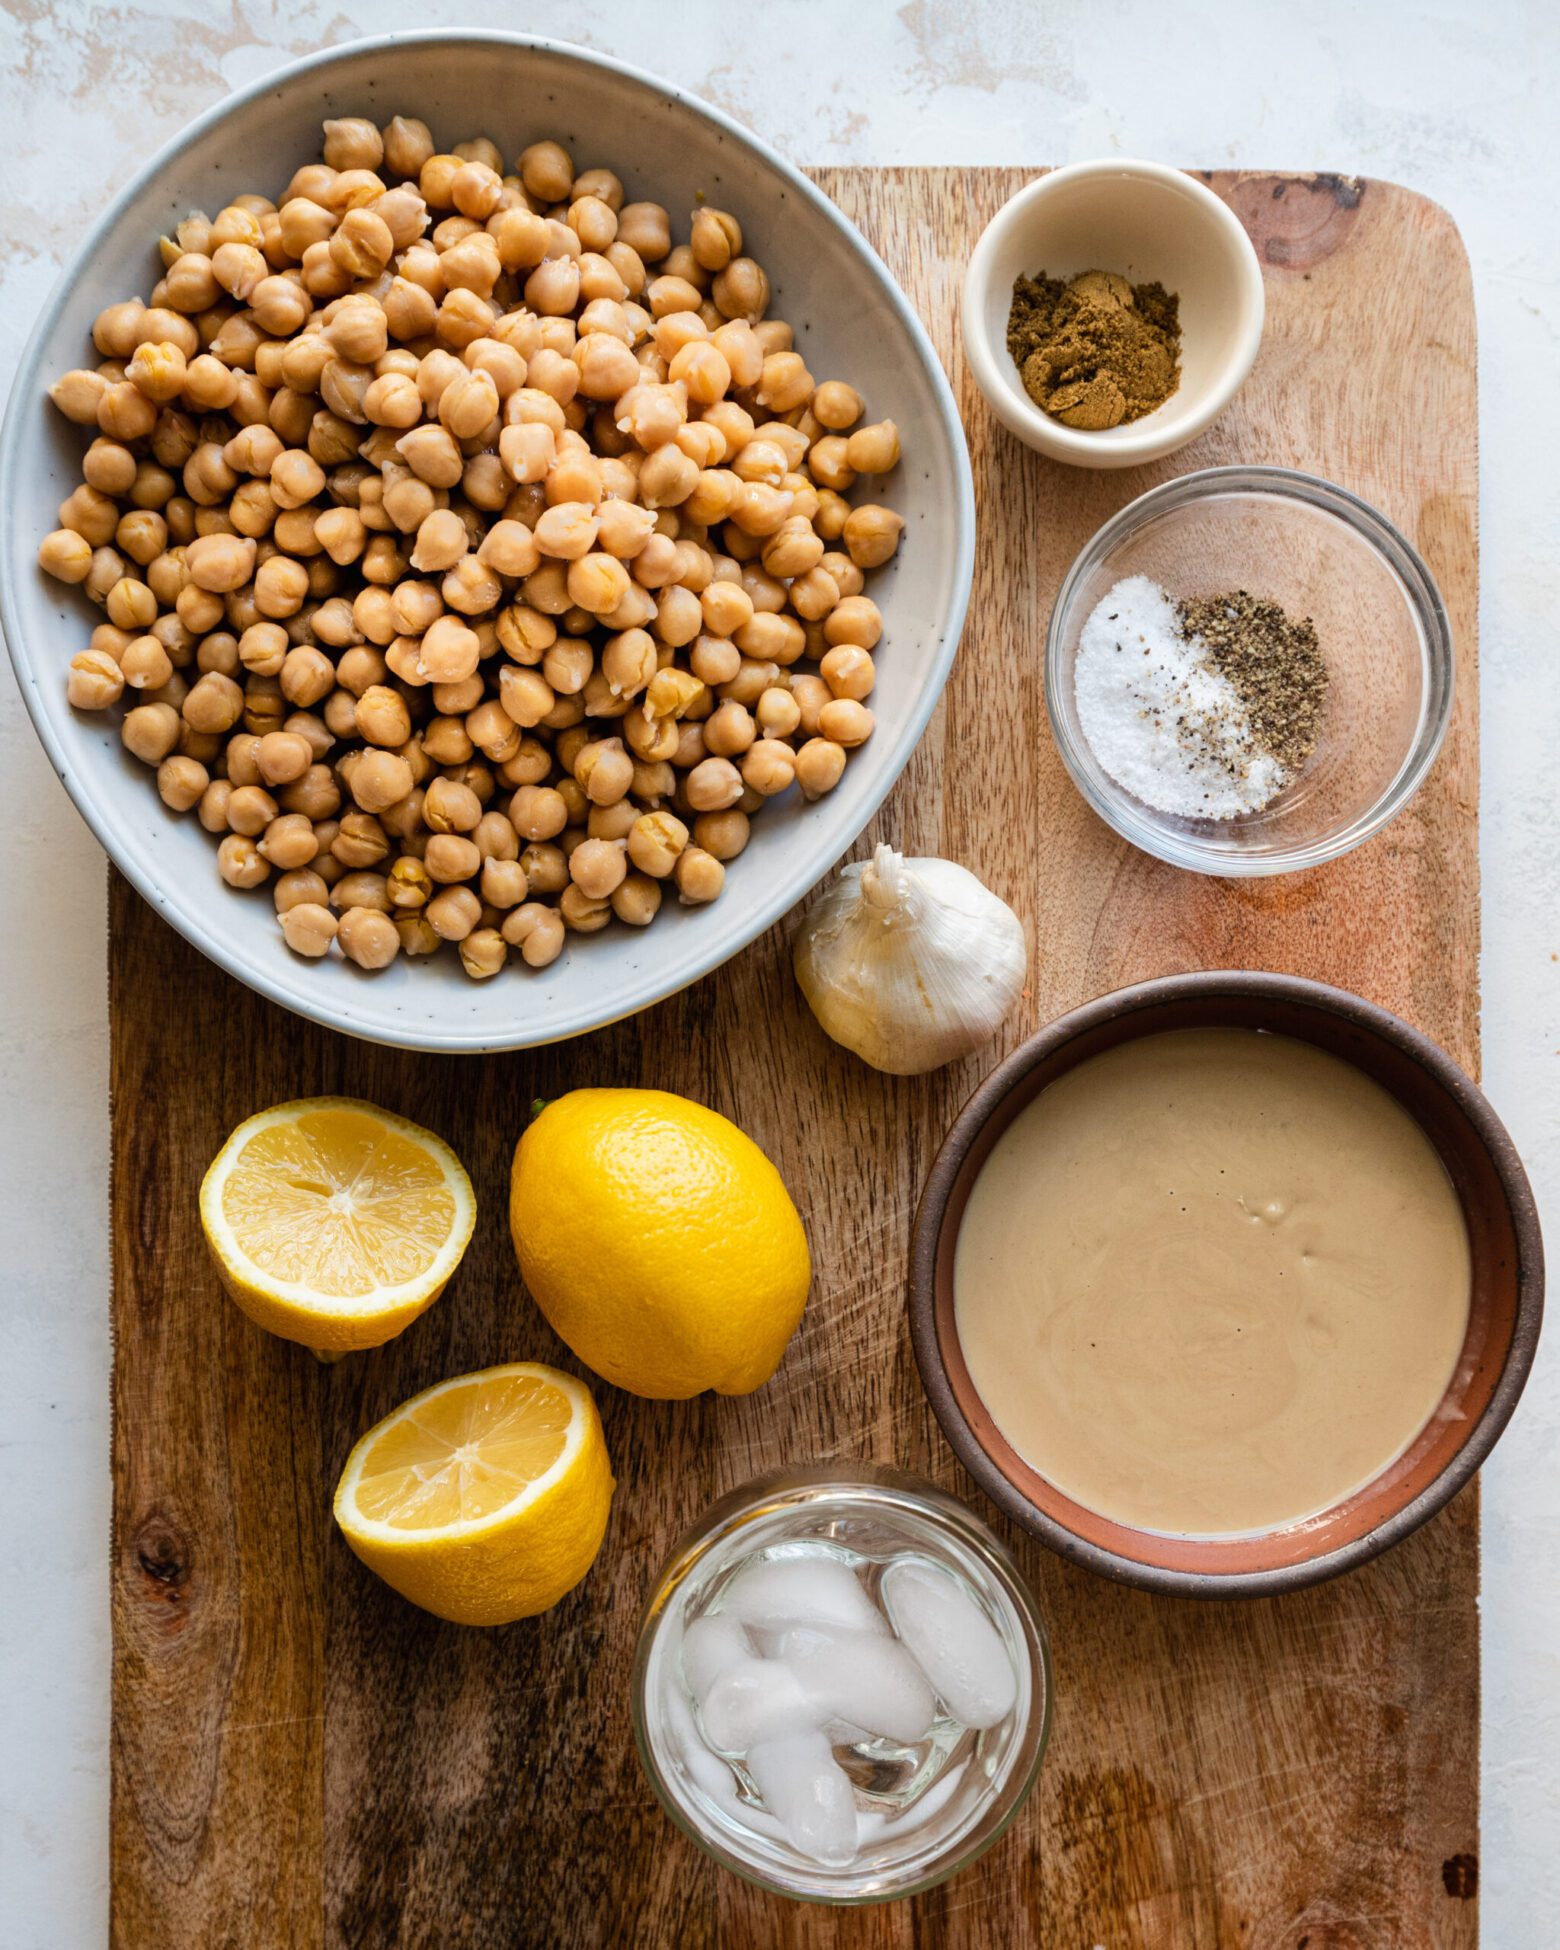 chickpeas, tahini, lemons, garlic on cutting board - ingredients for hummus